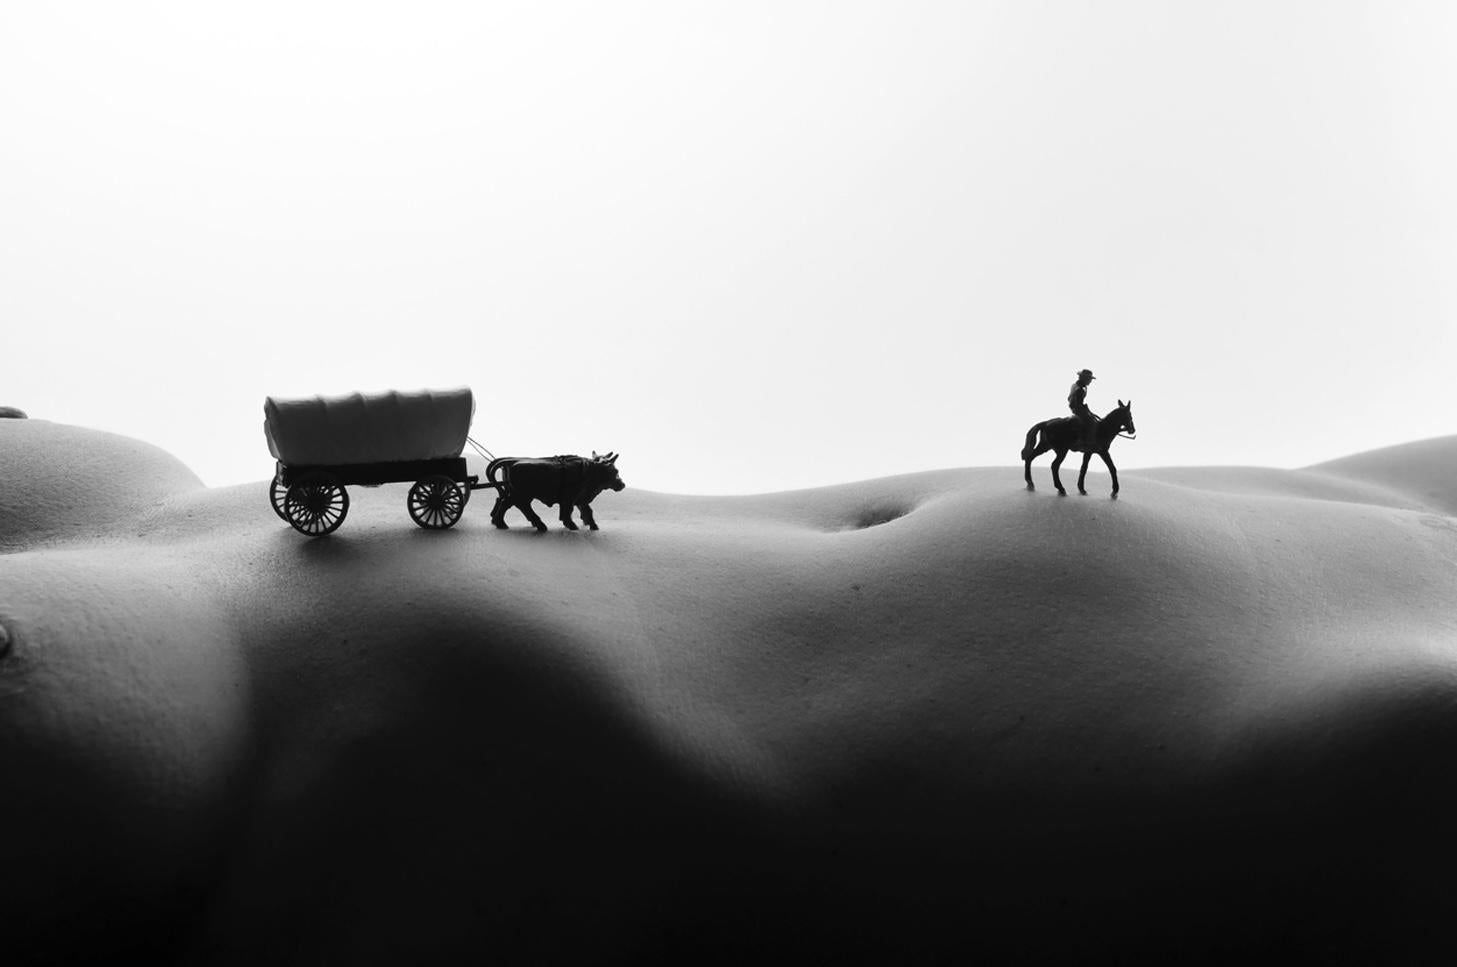 Conastoga wagon - black and white photography - Photograph by Allan I. Teger